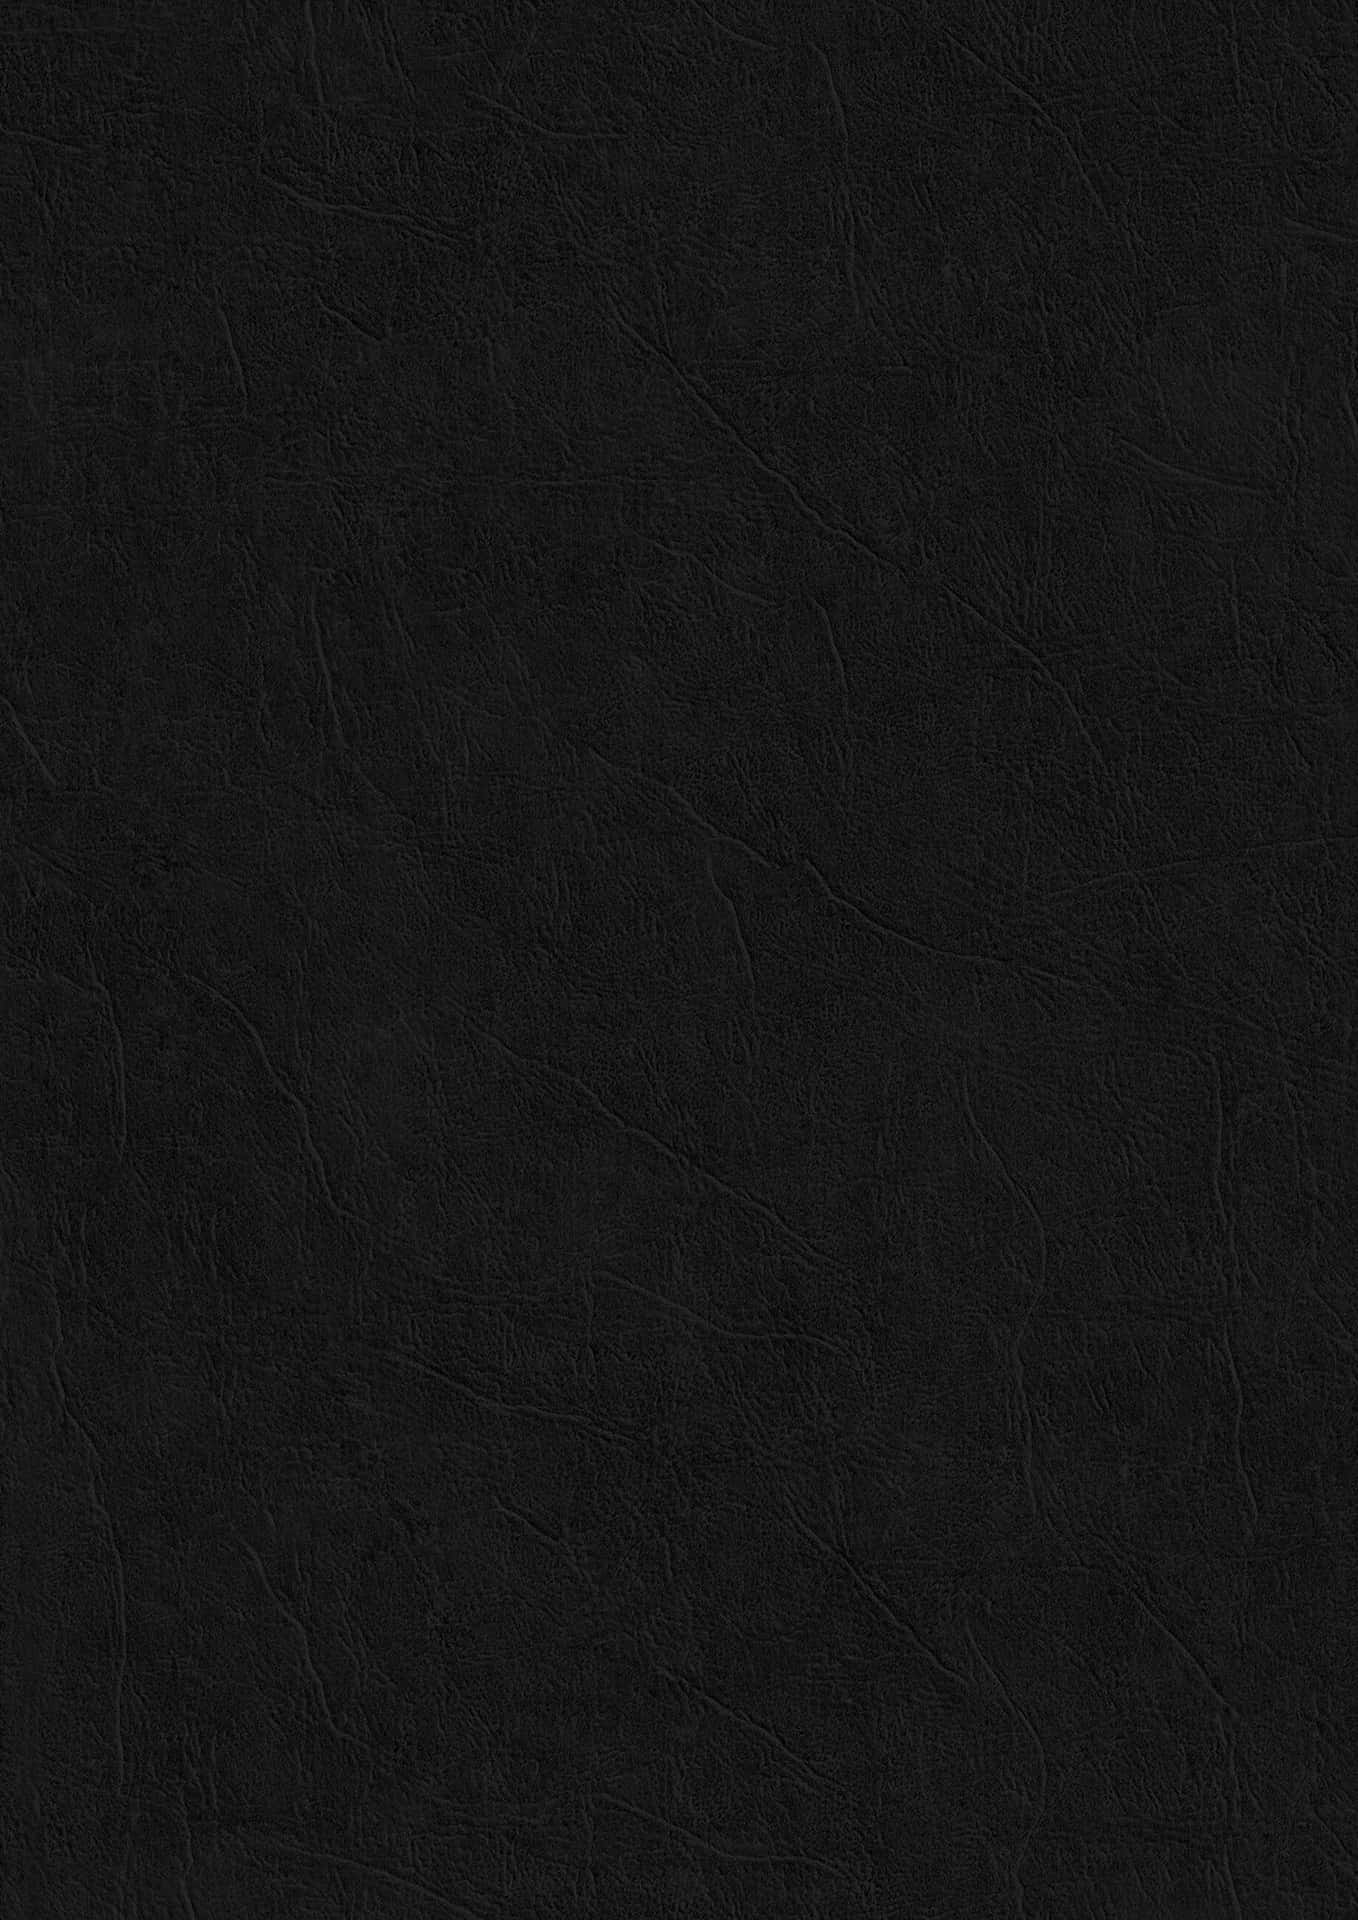 Elegant Black Paper Texture Background